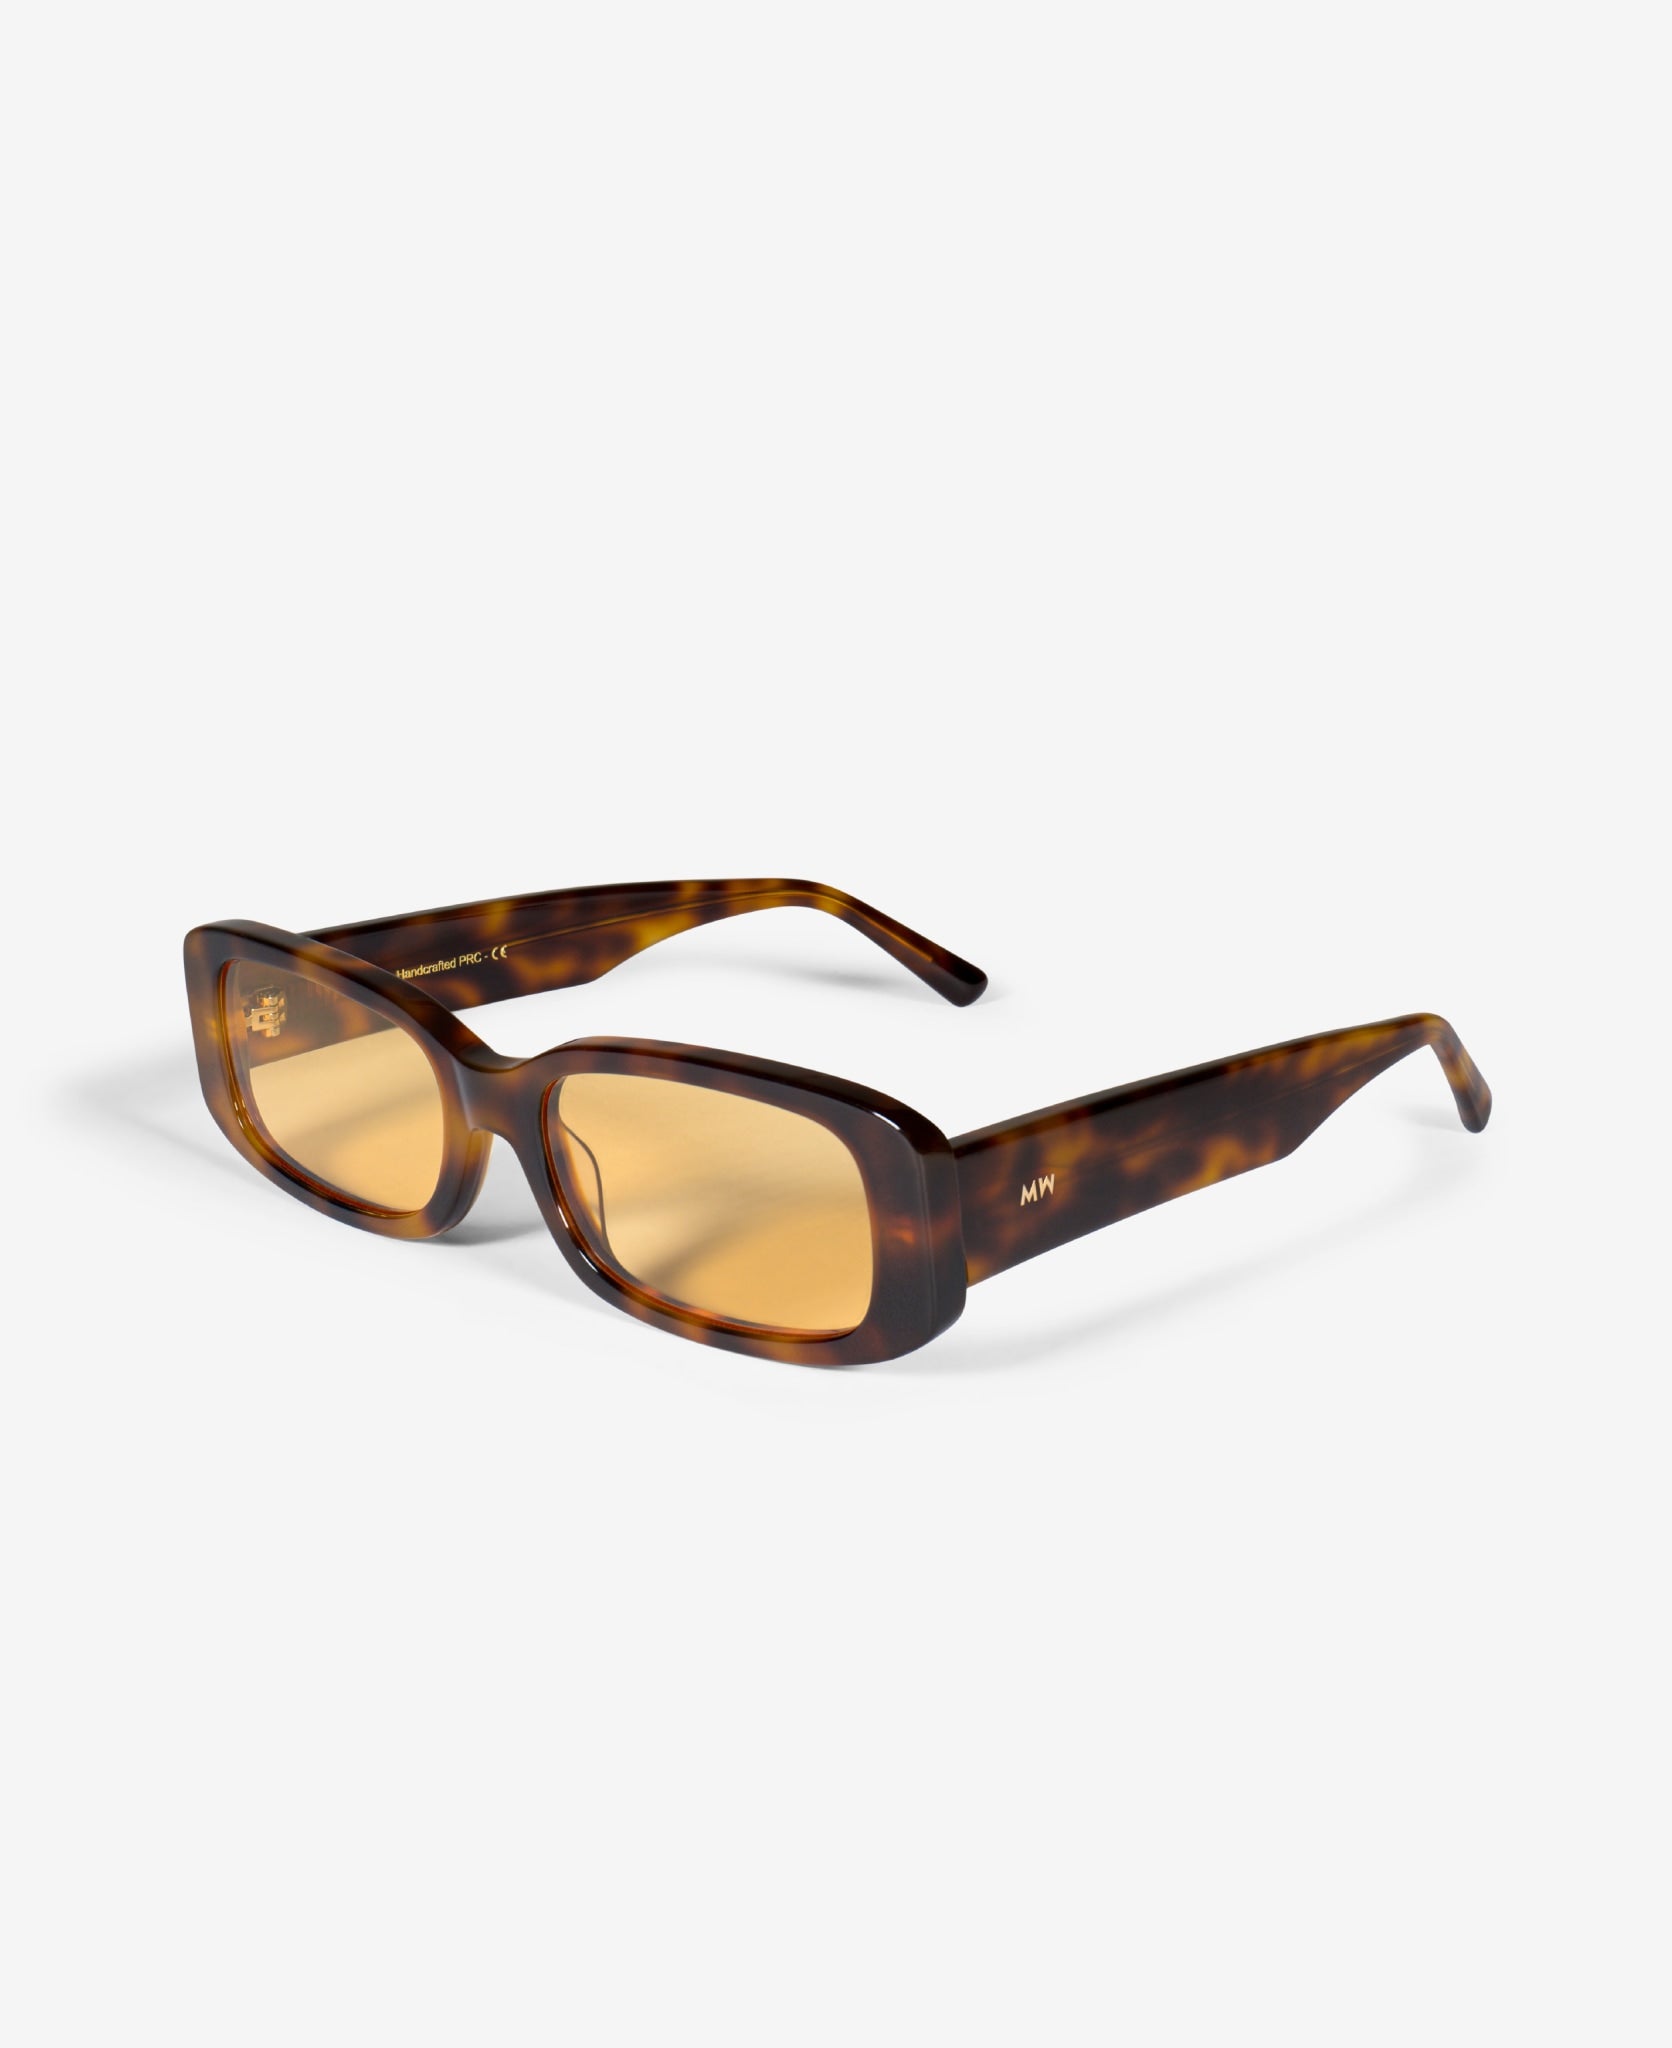 Yellow - Sunglasses|MESSYWEEKEND - ROXIE Tortoise Lens